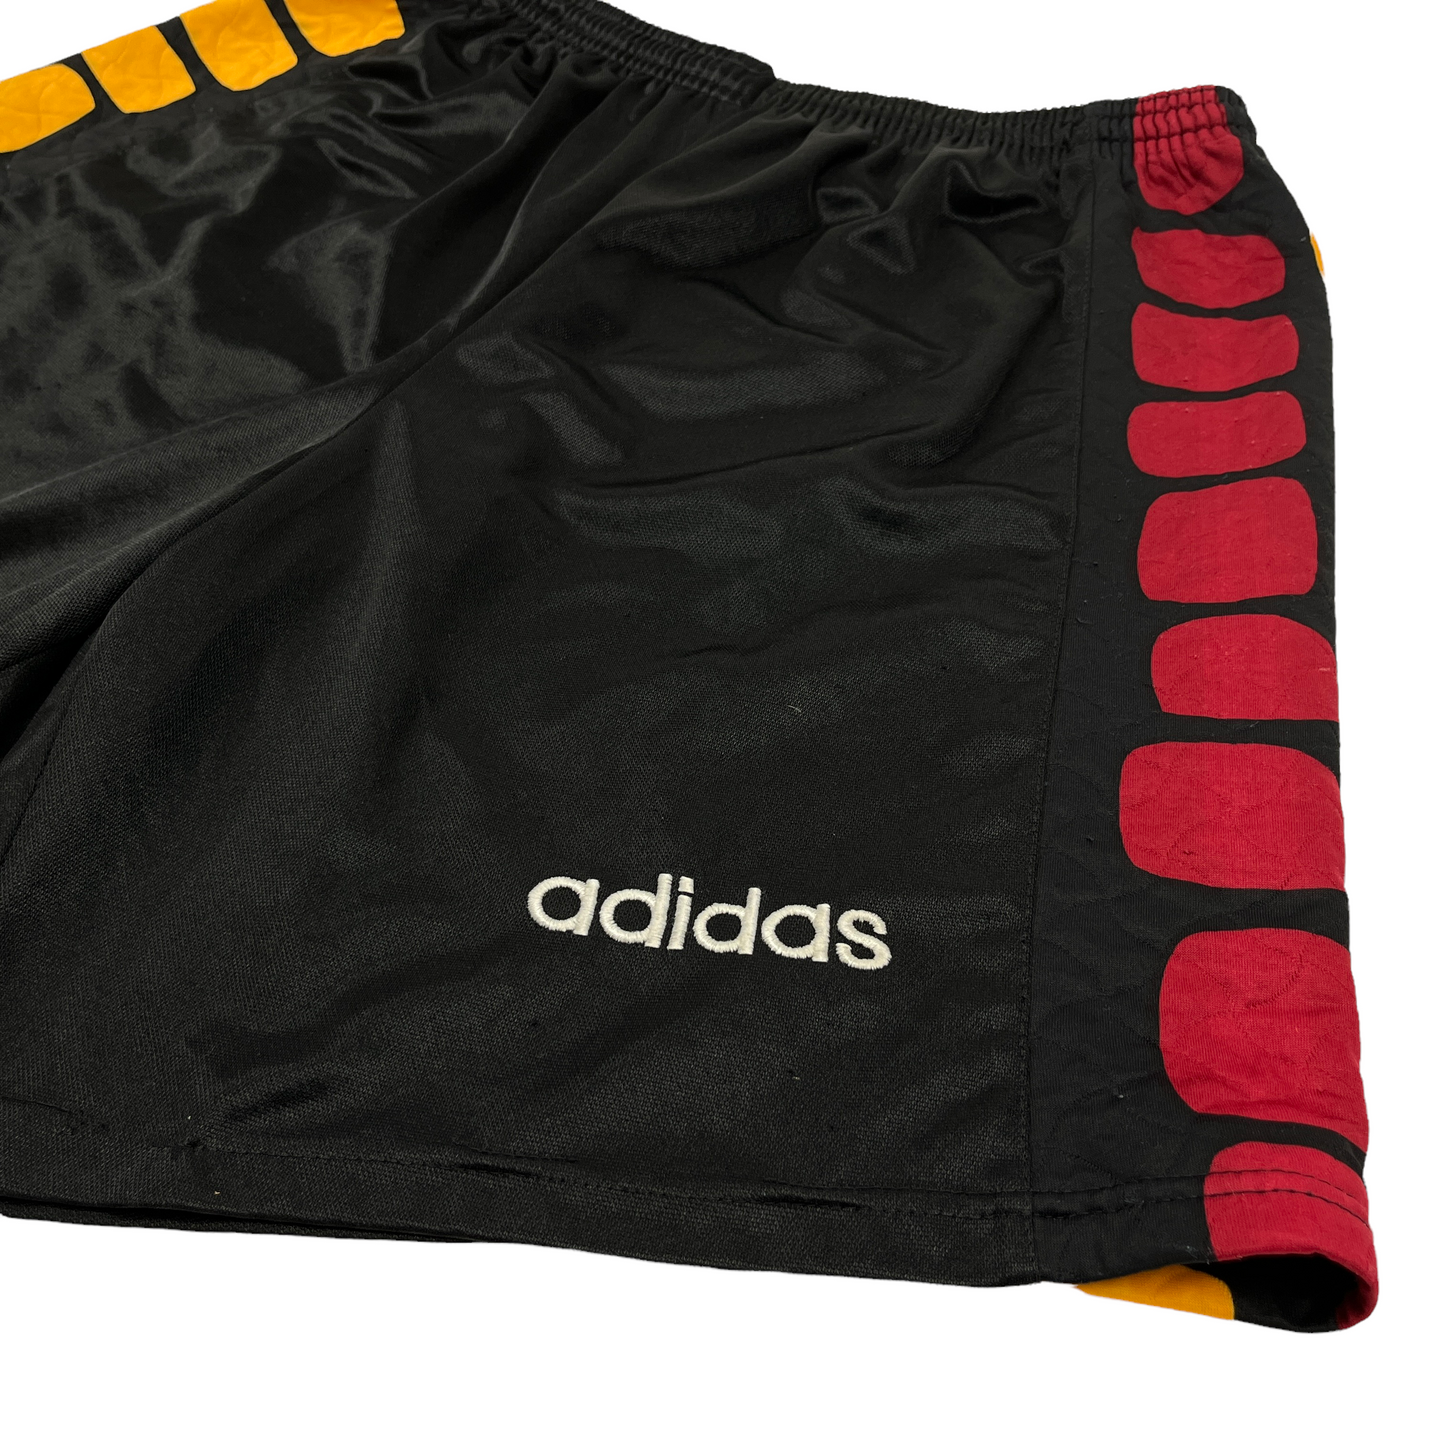 01015 Adidas “predator” Goalkeeper Shorts